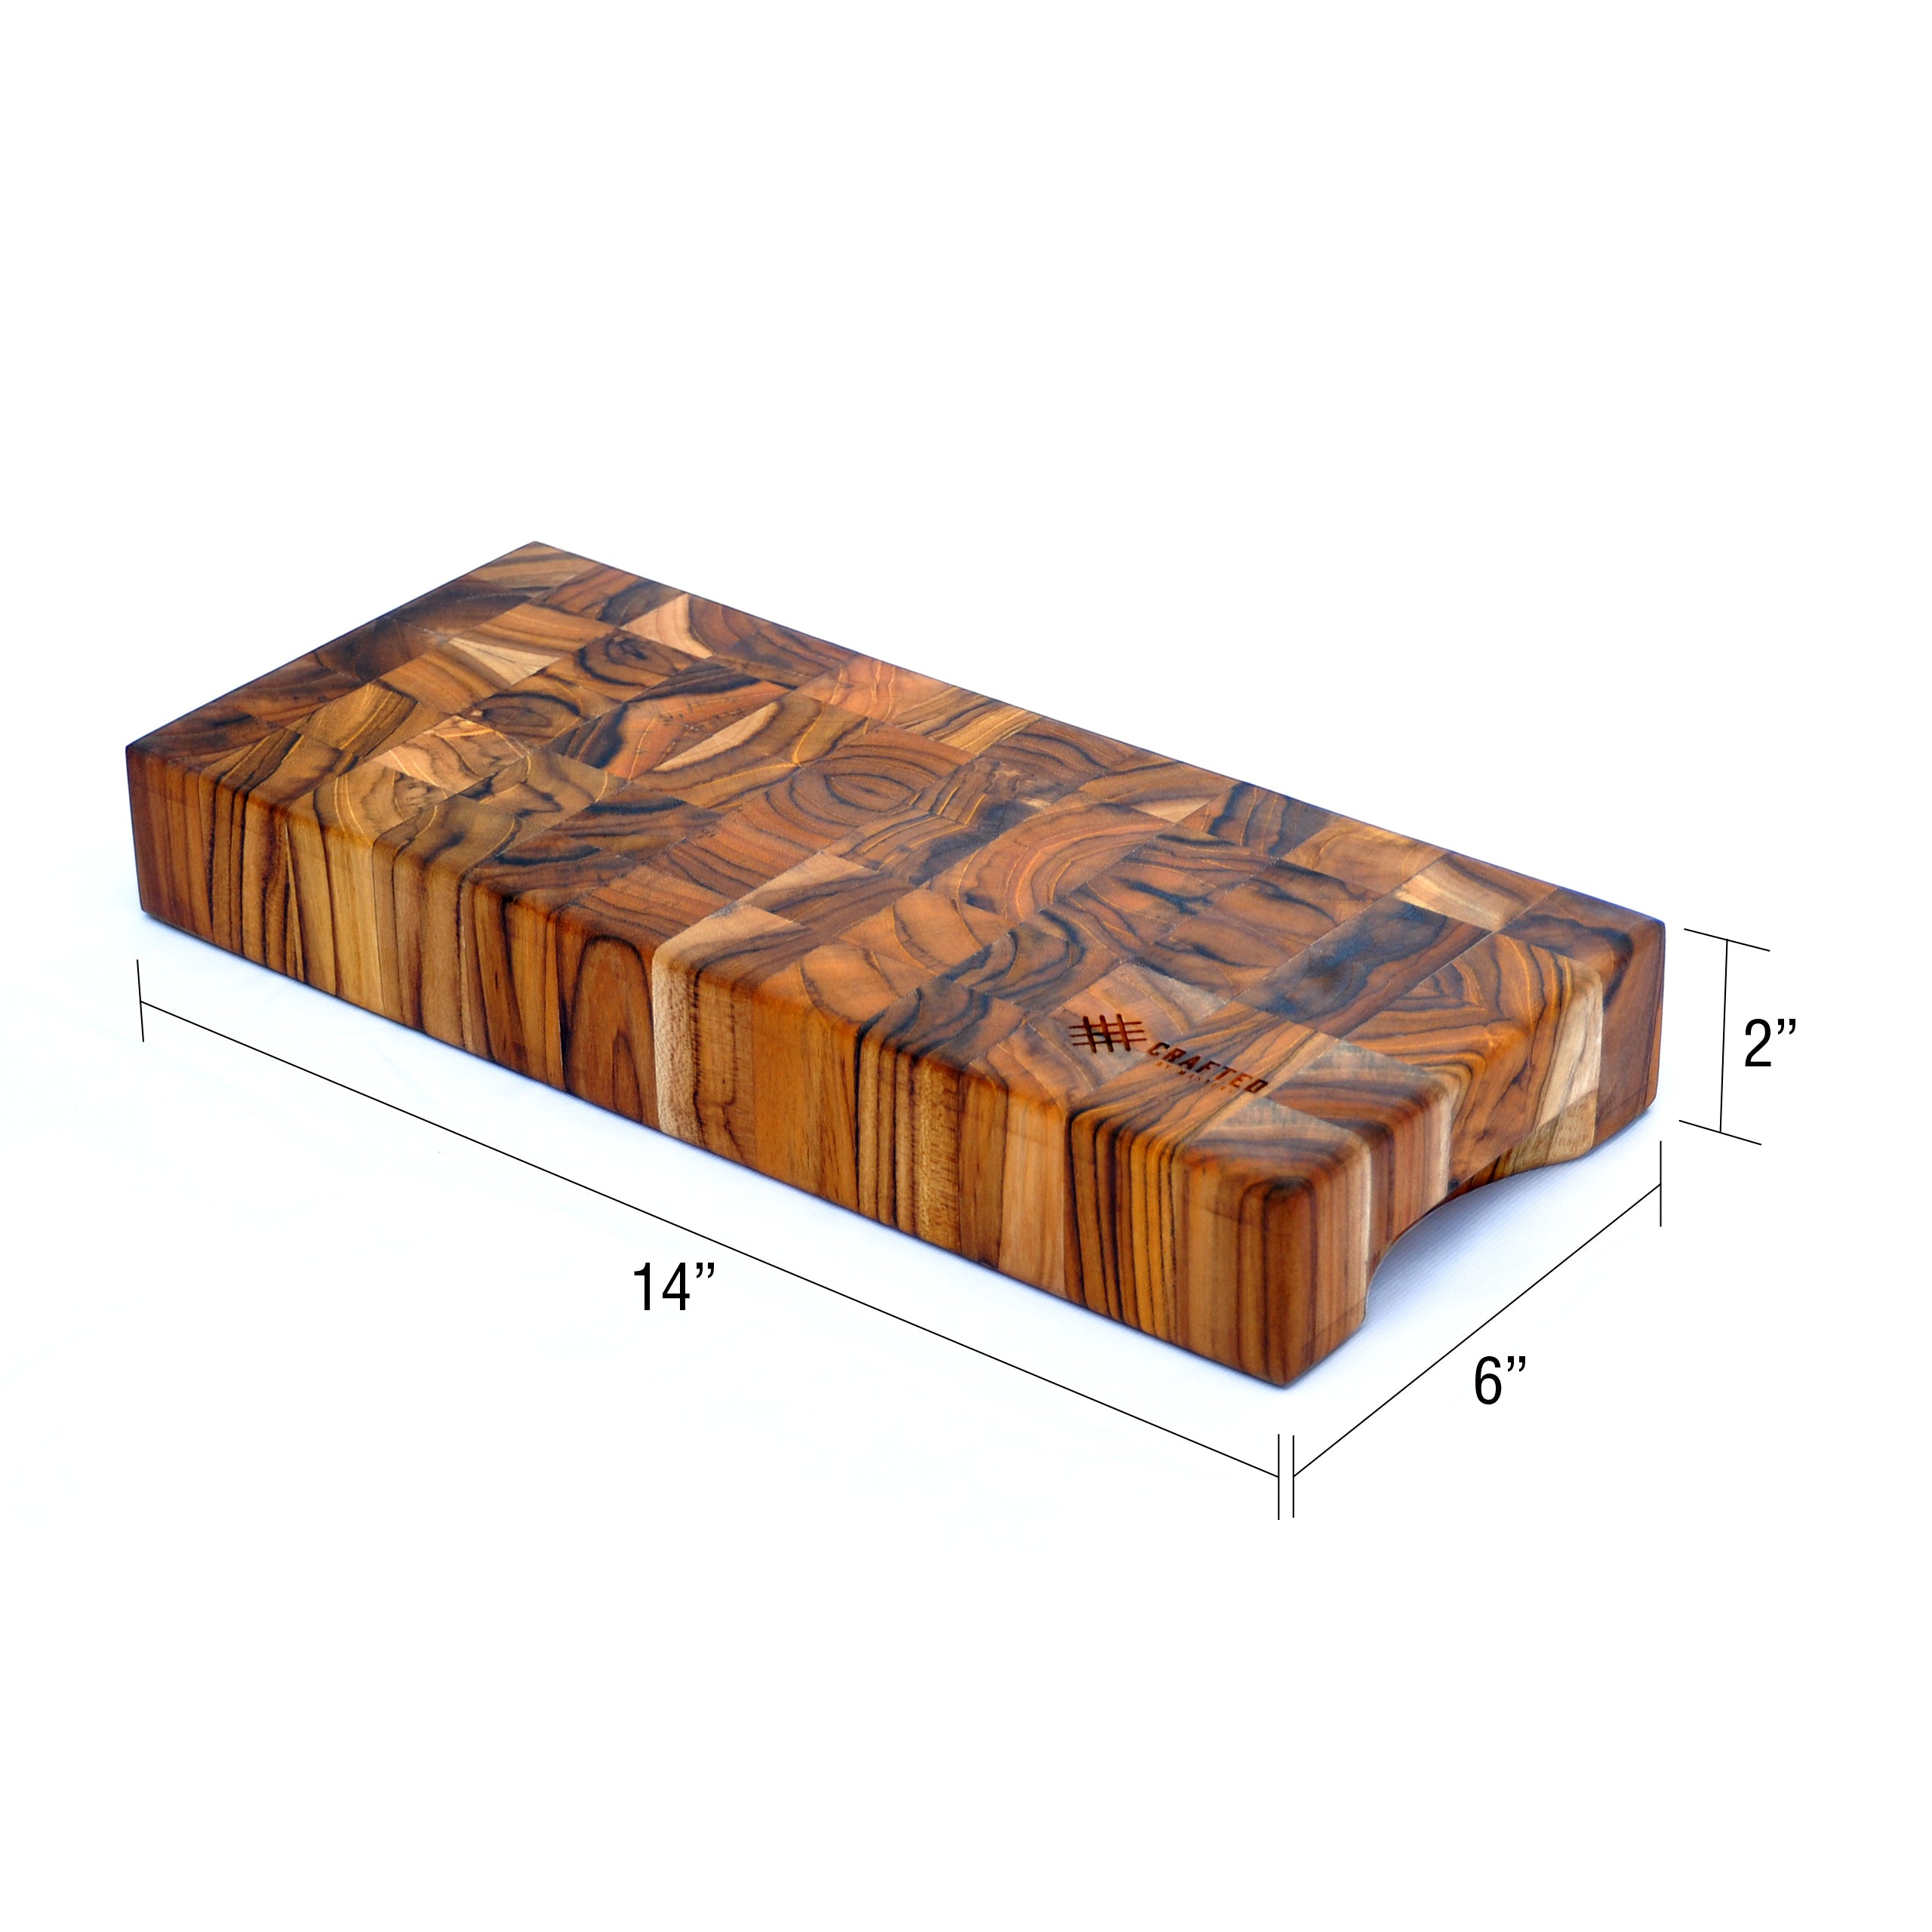 Acacia Vs Walnut: Choosing the Superior Wood Finish